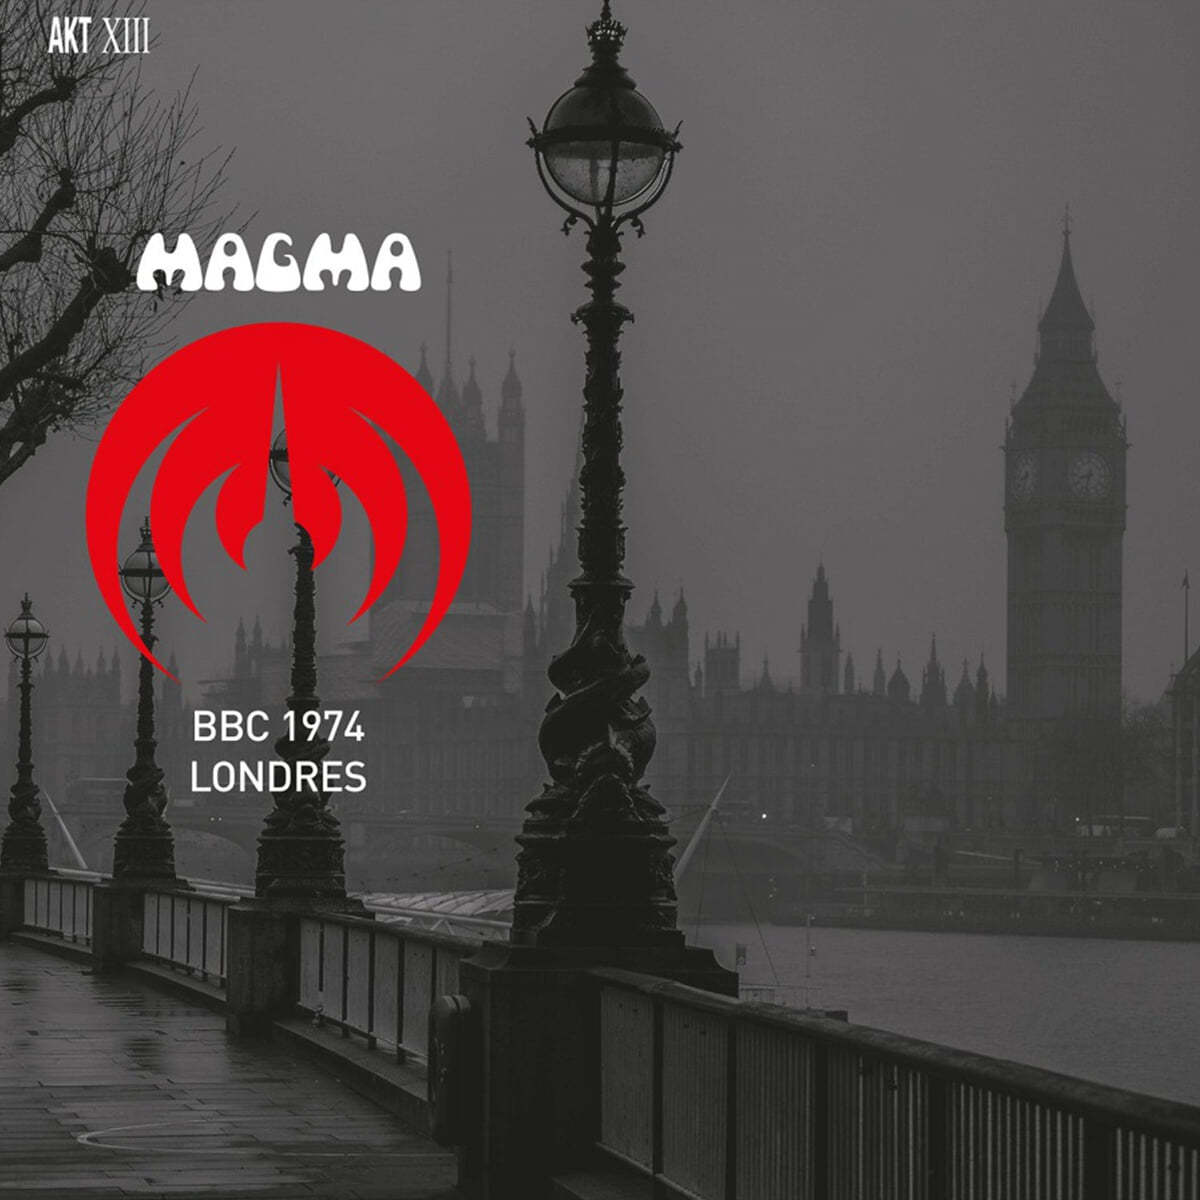 Magma (마그마) - BBC 1974 Londres [투명 레드 컬러 2LP] 